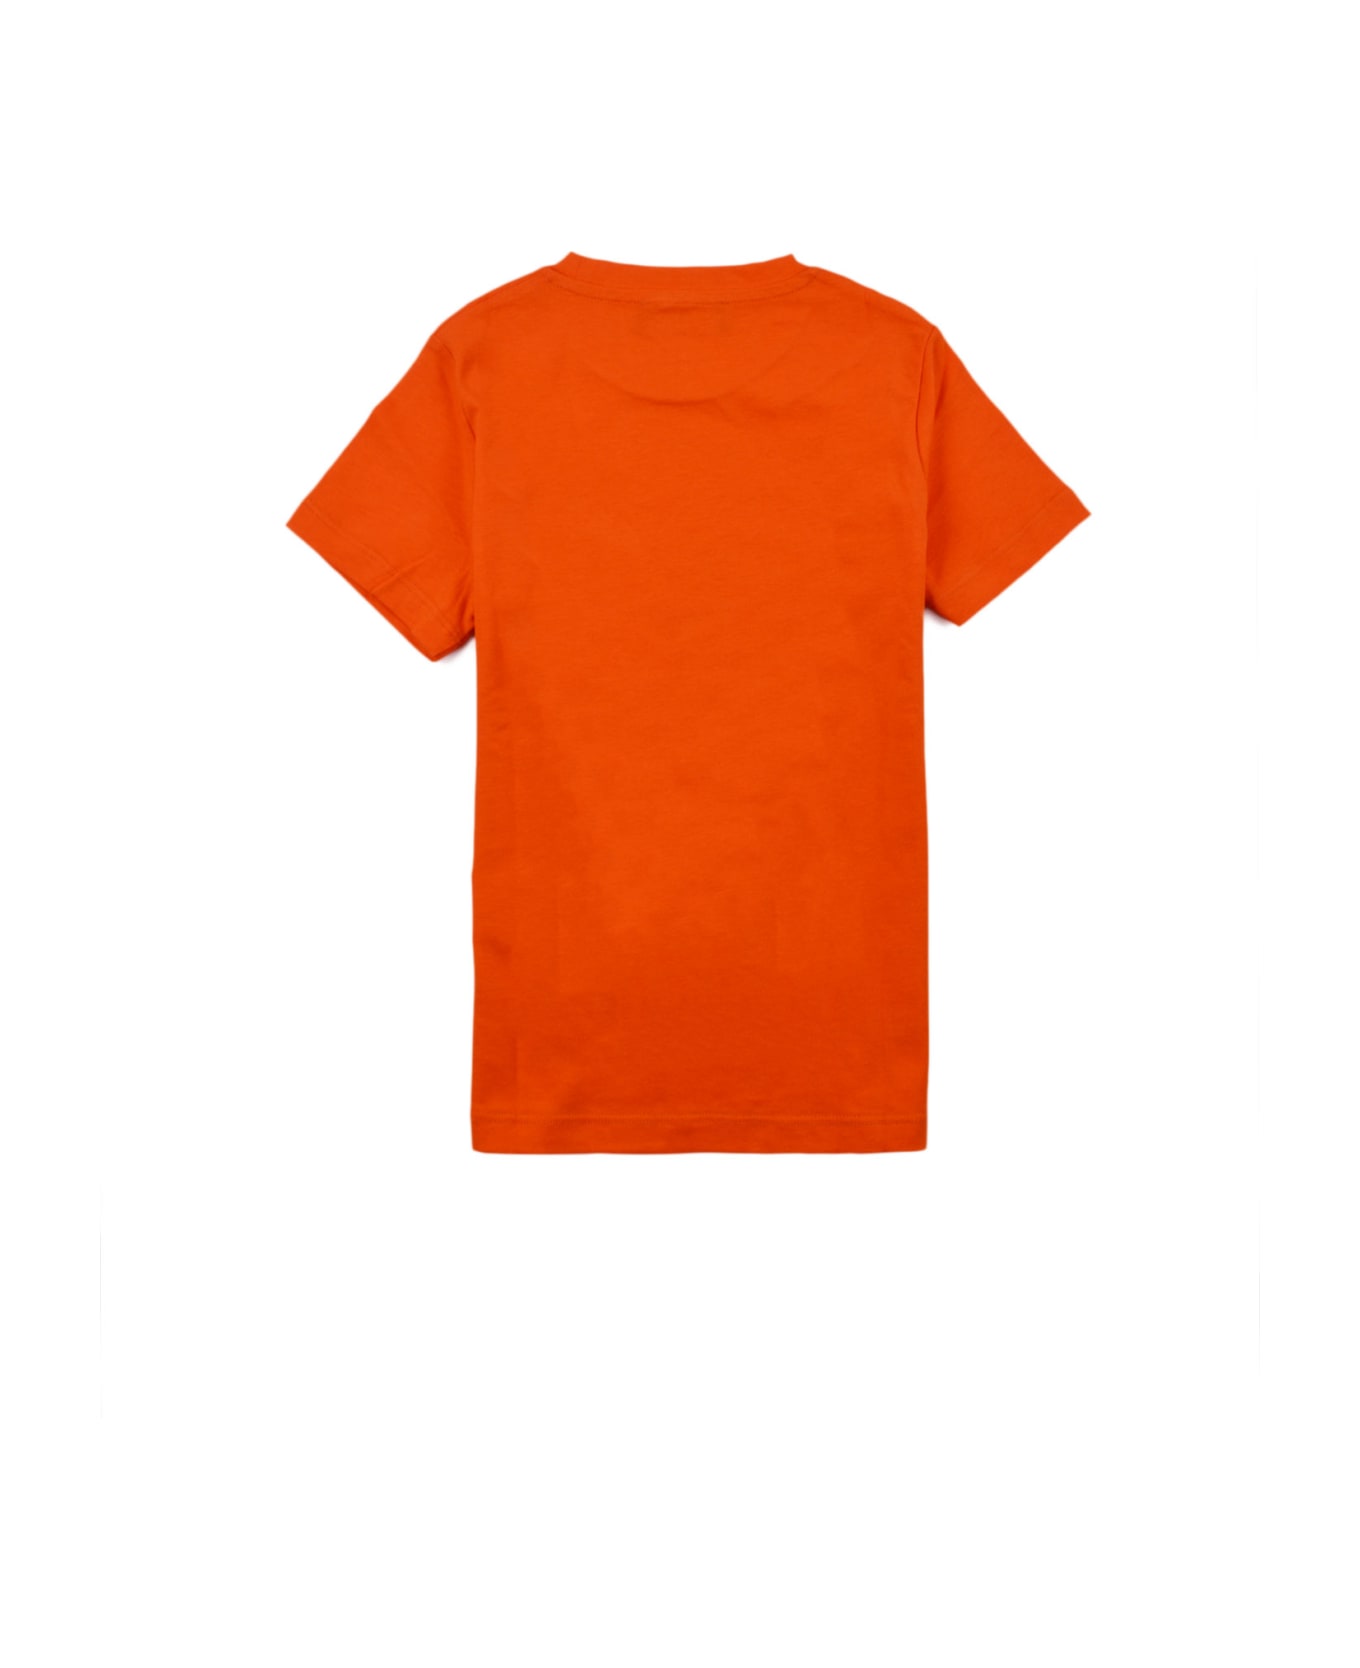 Versace Medusa Cotton T-shirt - Orange